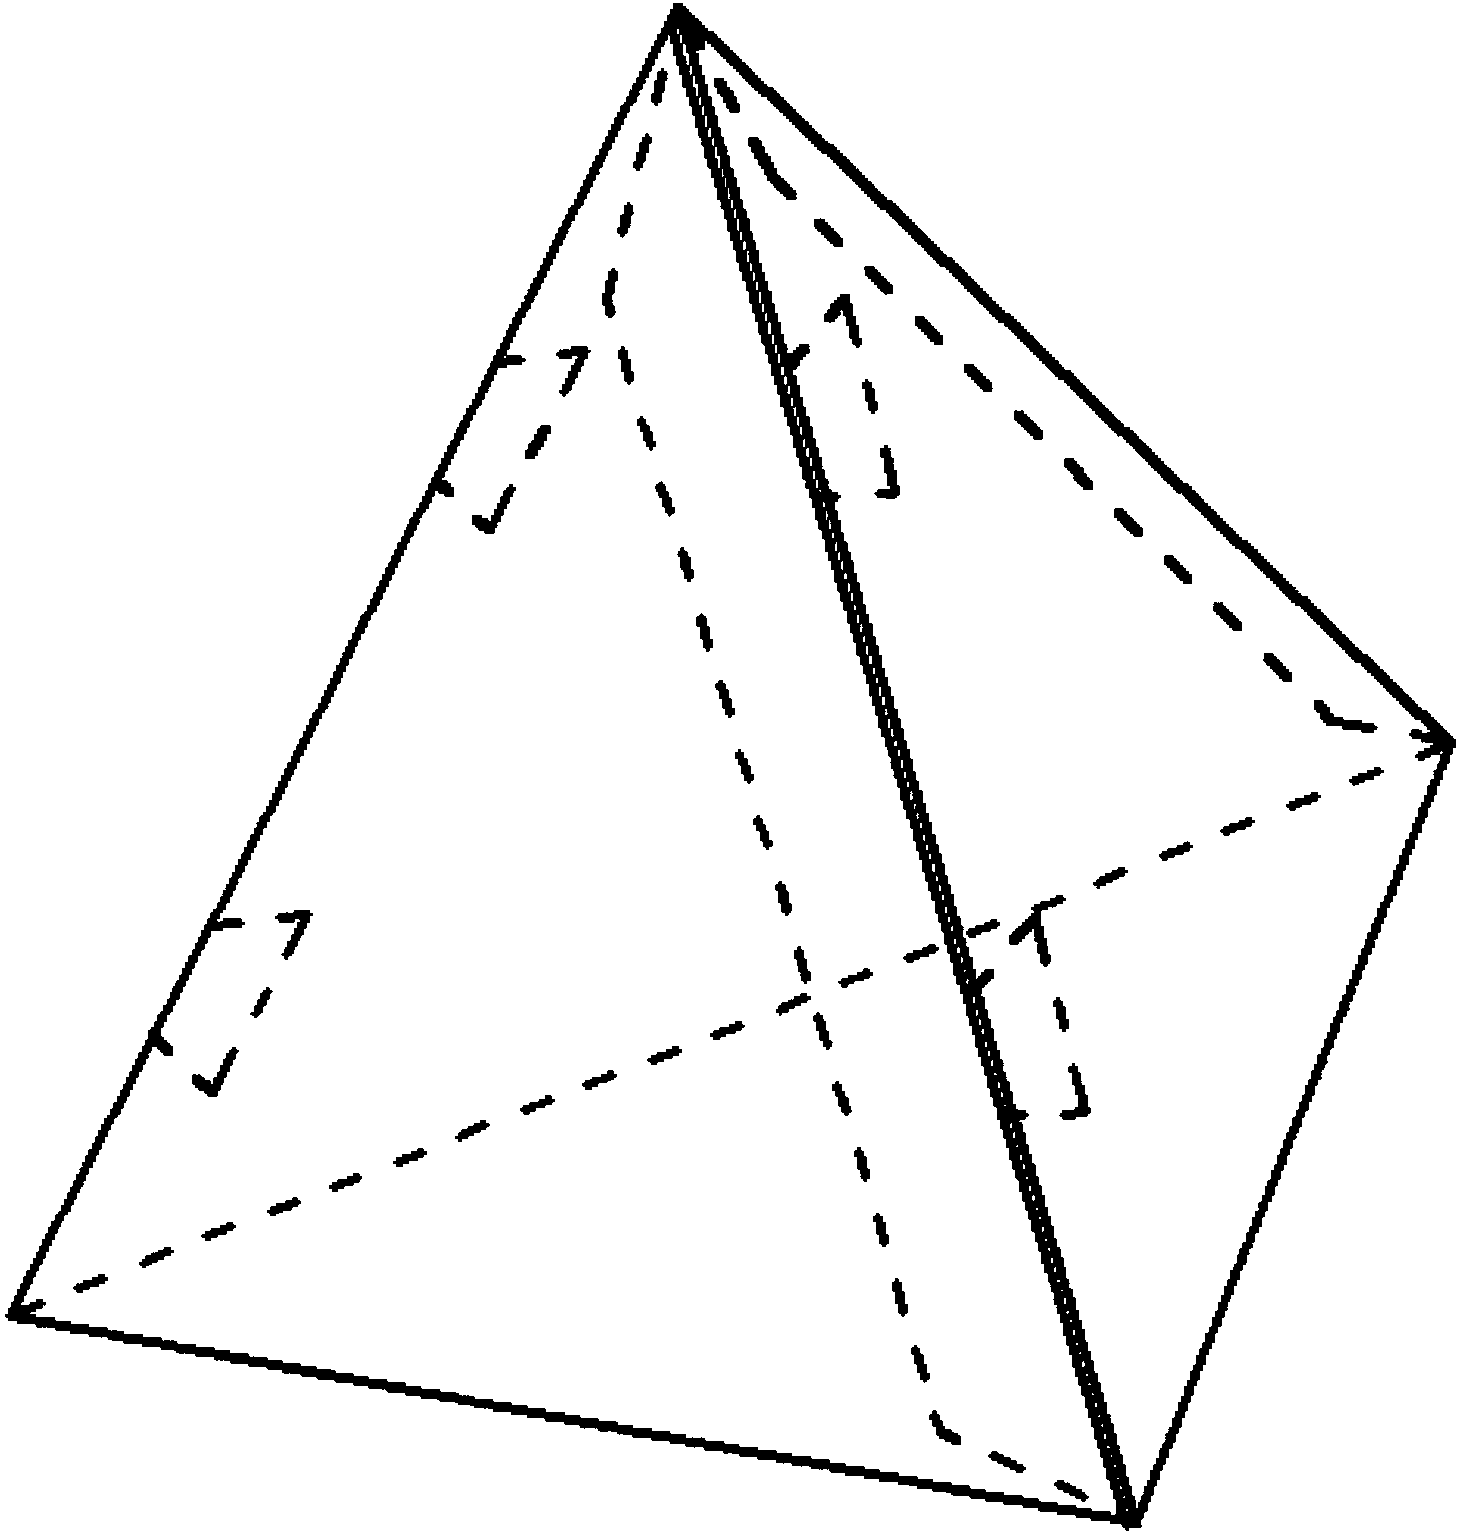 Folded-type triangular box structure